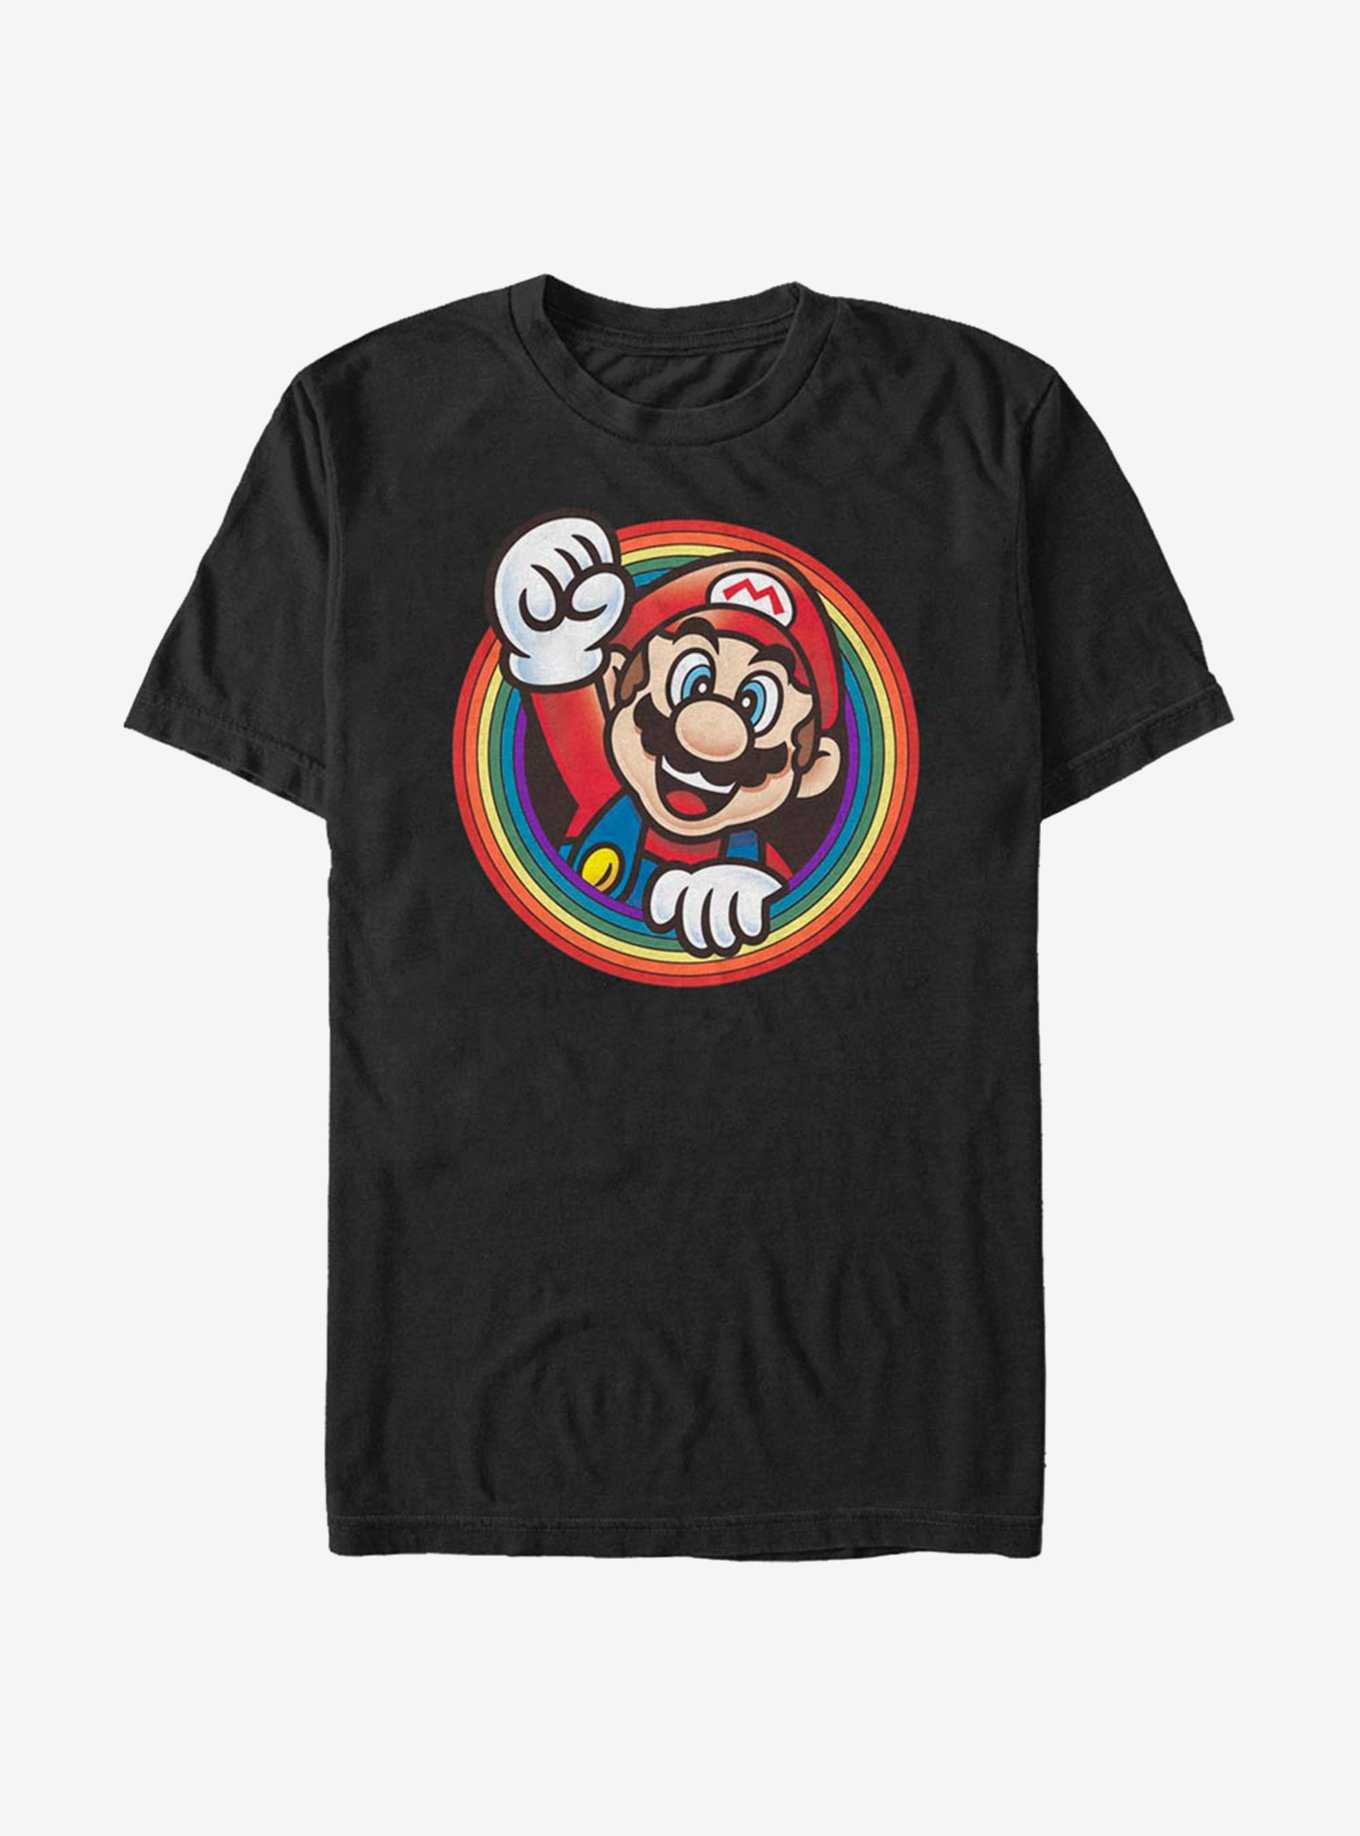 Super Mario Rainbow Mario T-Shirt, , hi-res